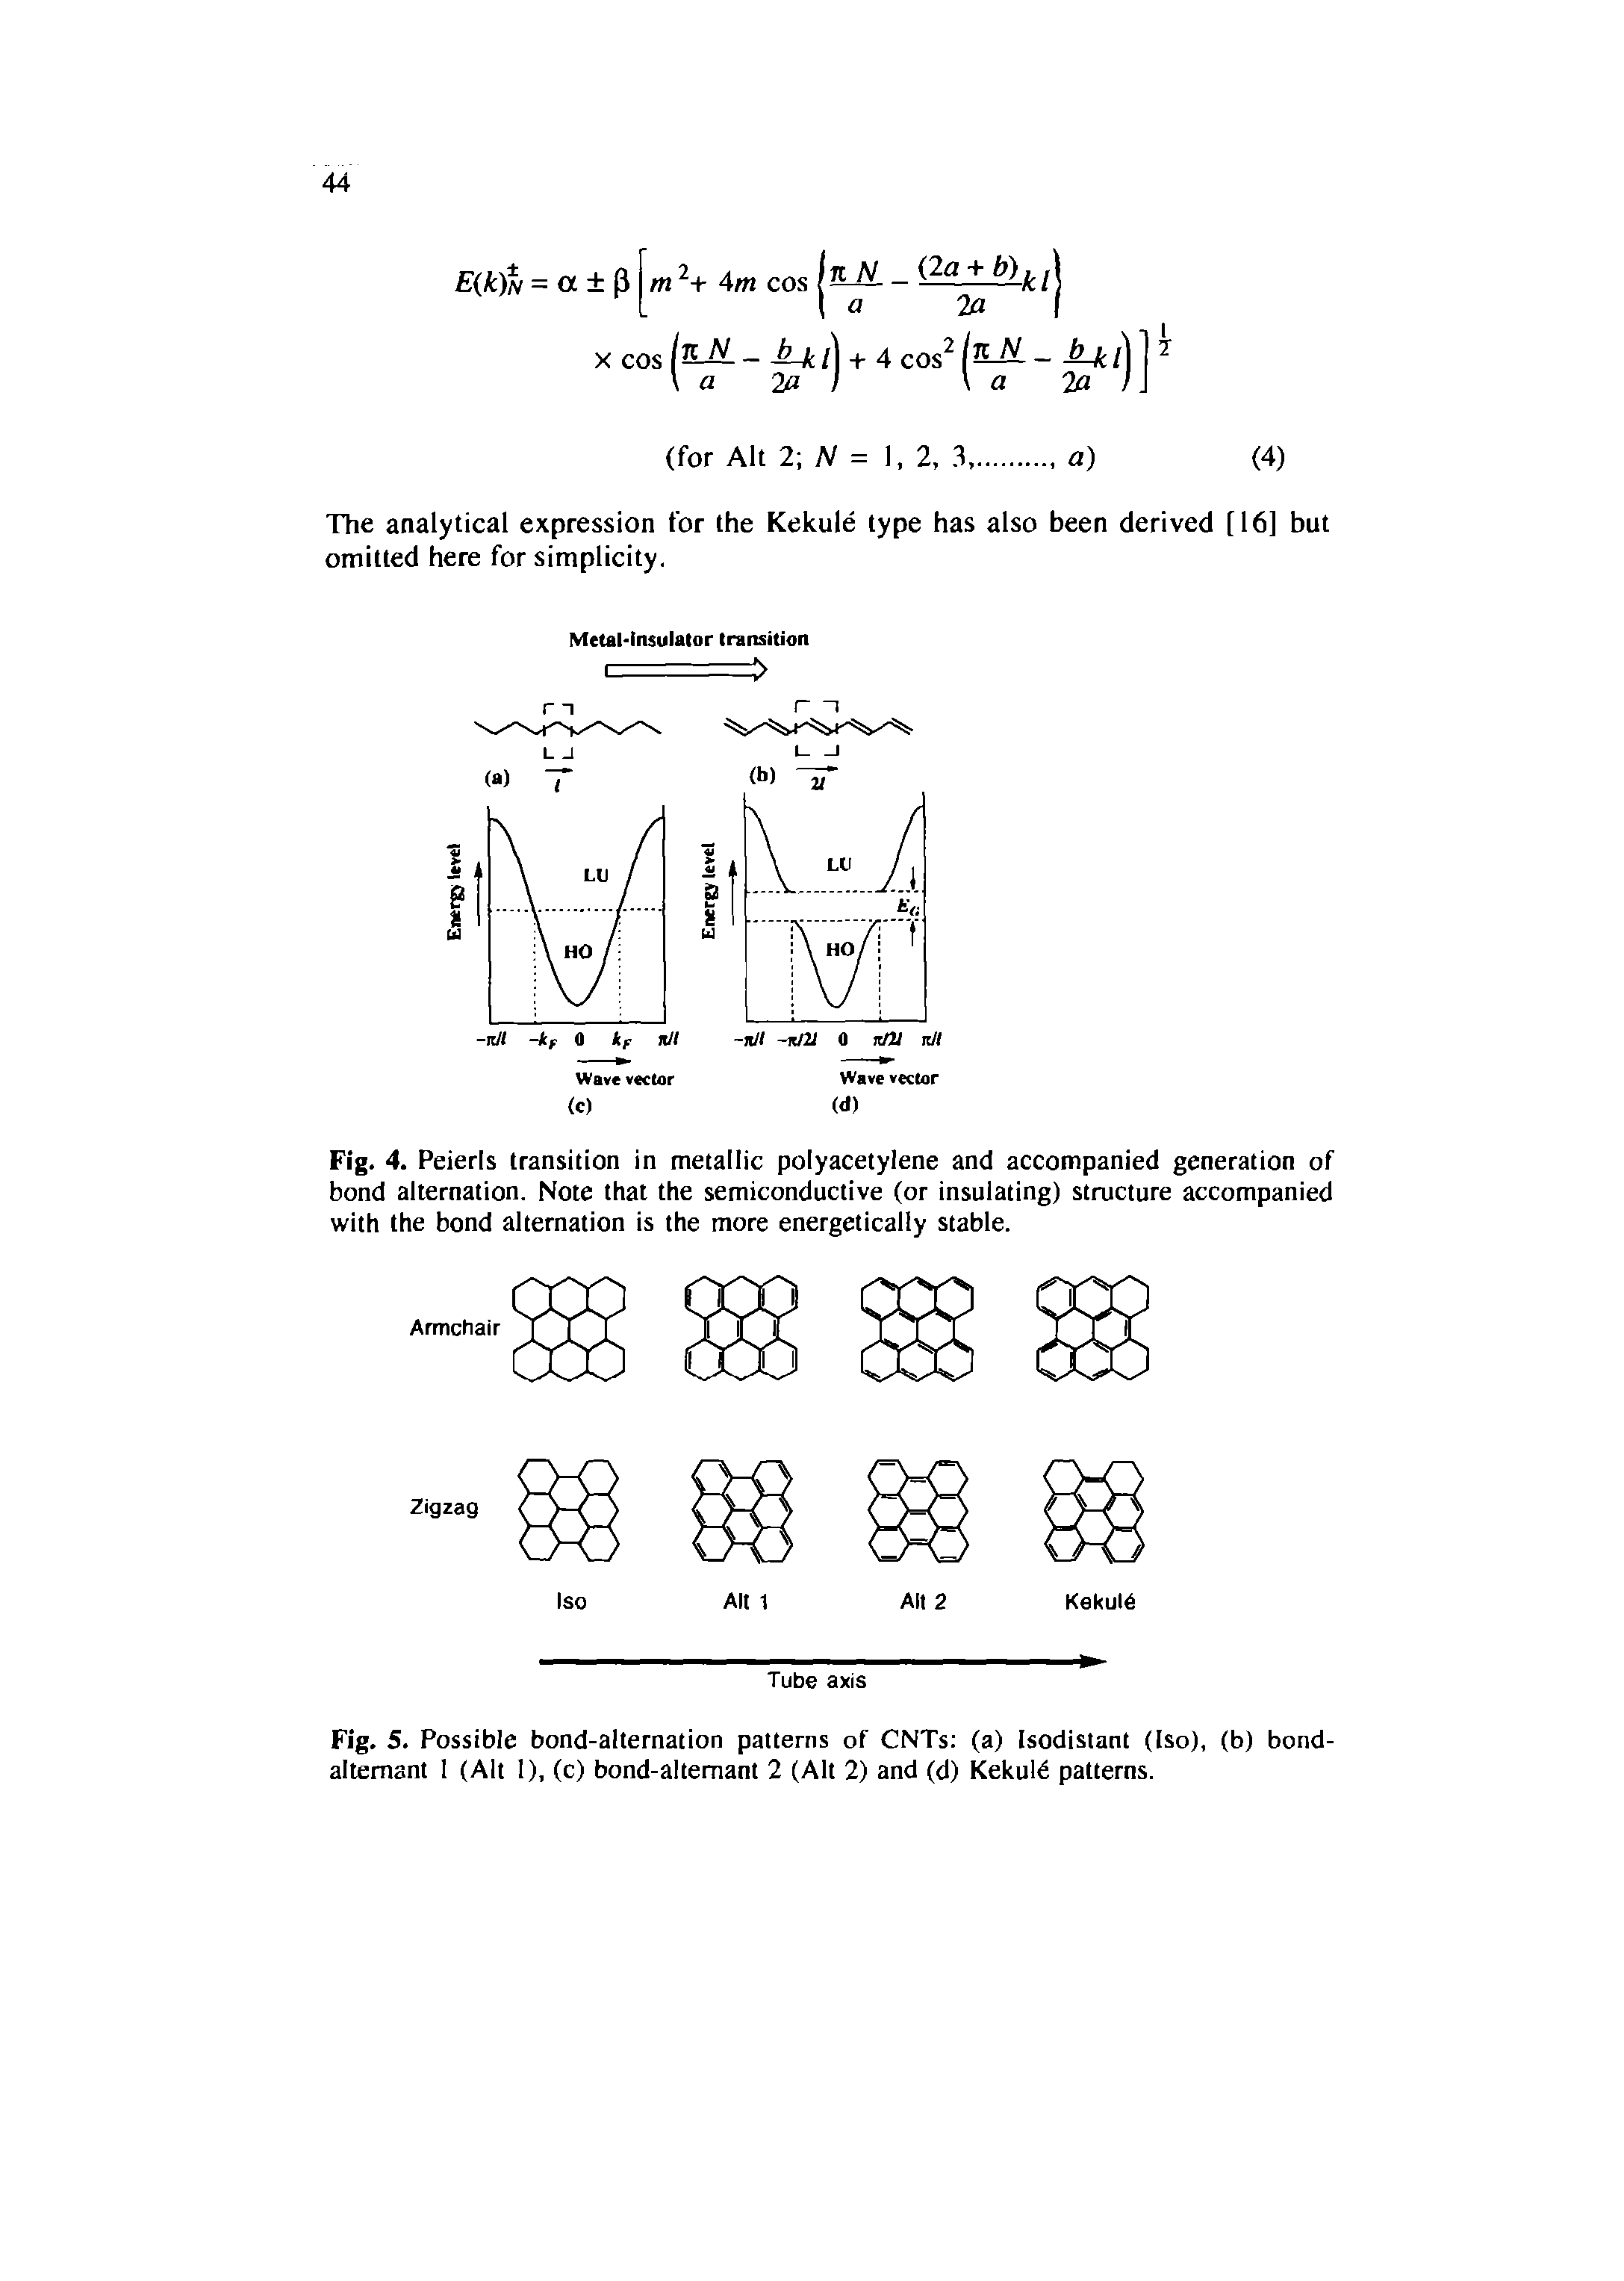 Fig. 5. Possible bond-alternation patterns of CNTs (a) Isodistant (Iso), (b) bond-altemant 1 (Alt 1), (c) bond-alternant 2 (Alt 2) and (d) Kekuld patterns.